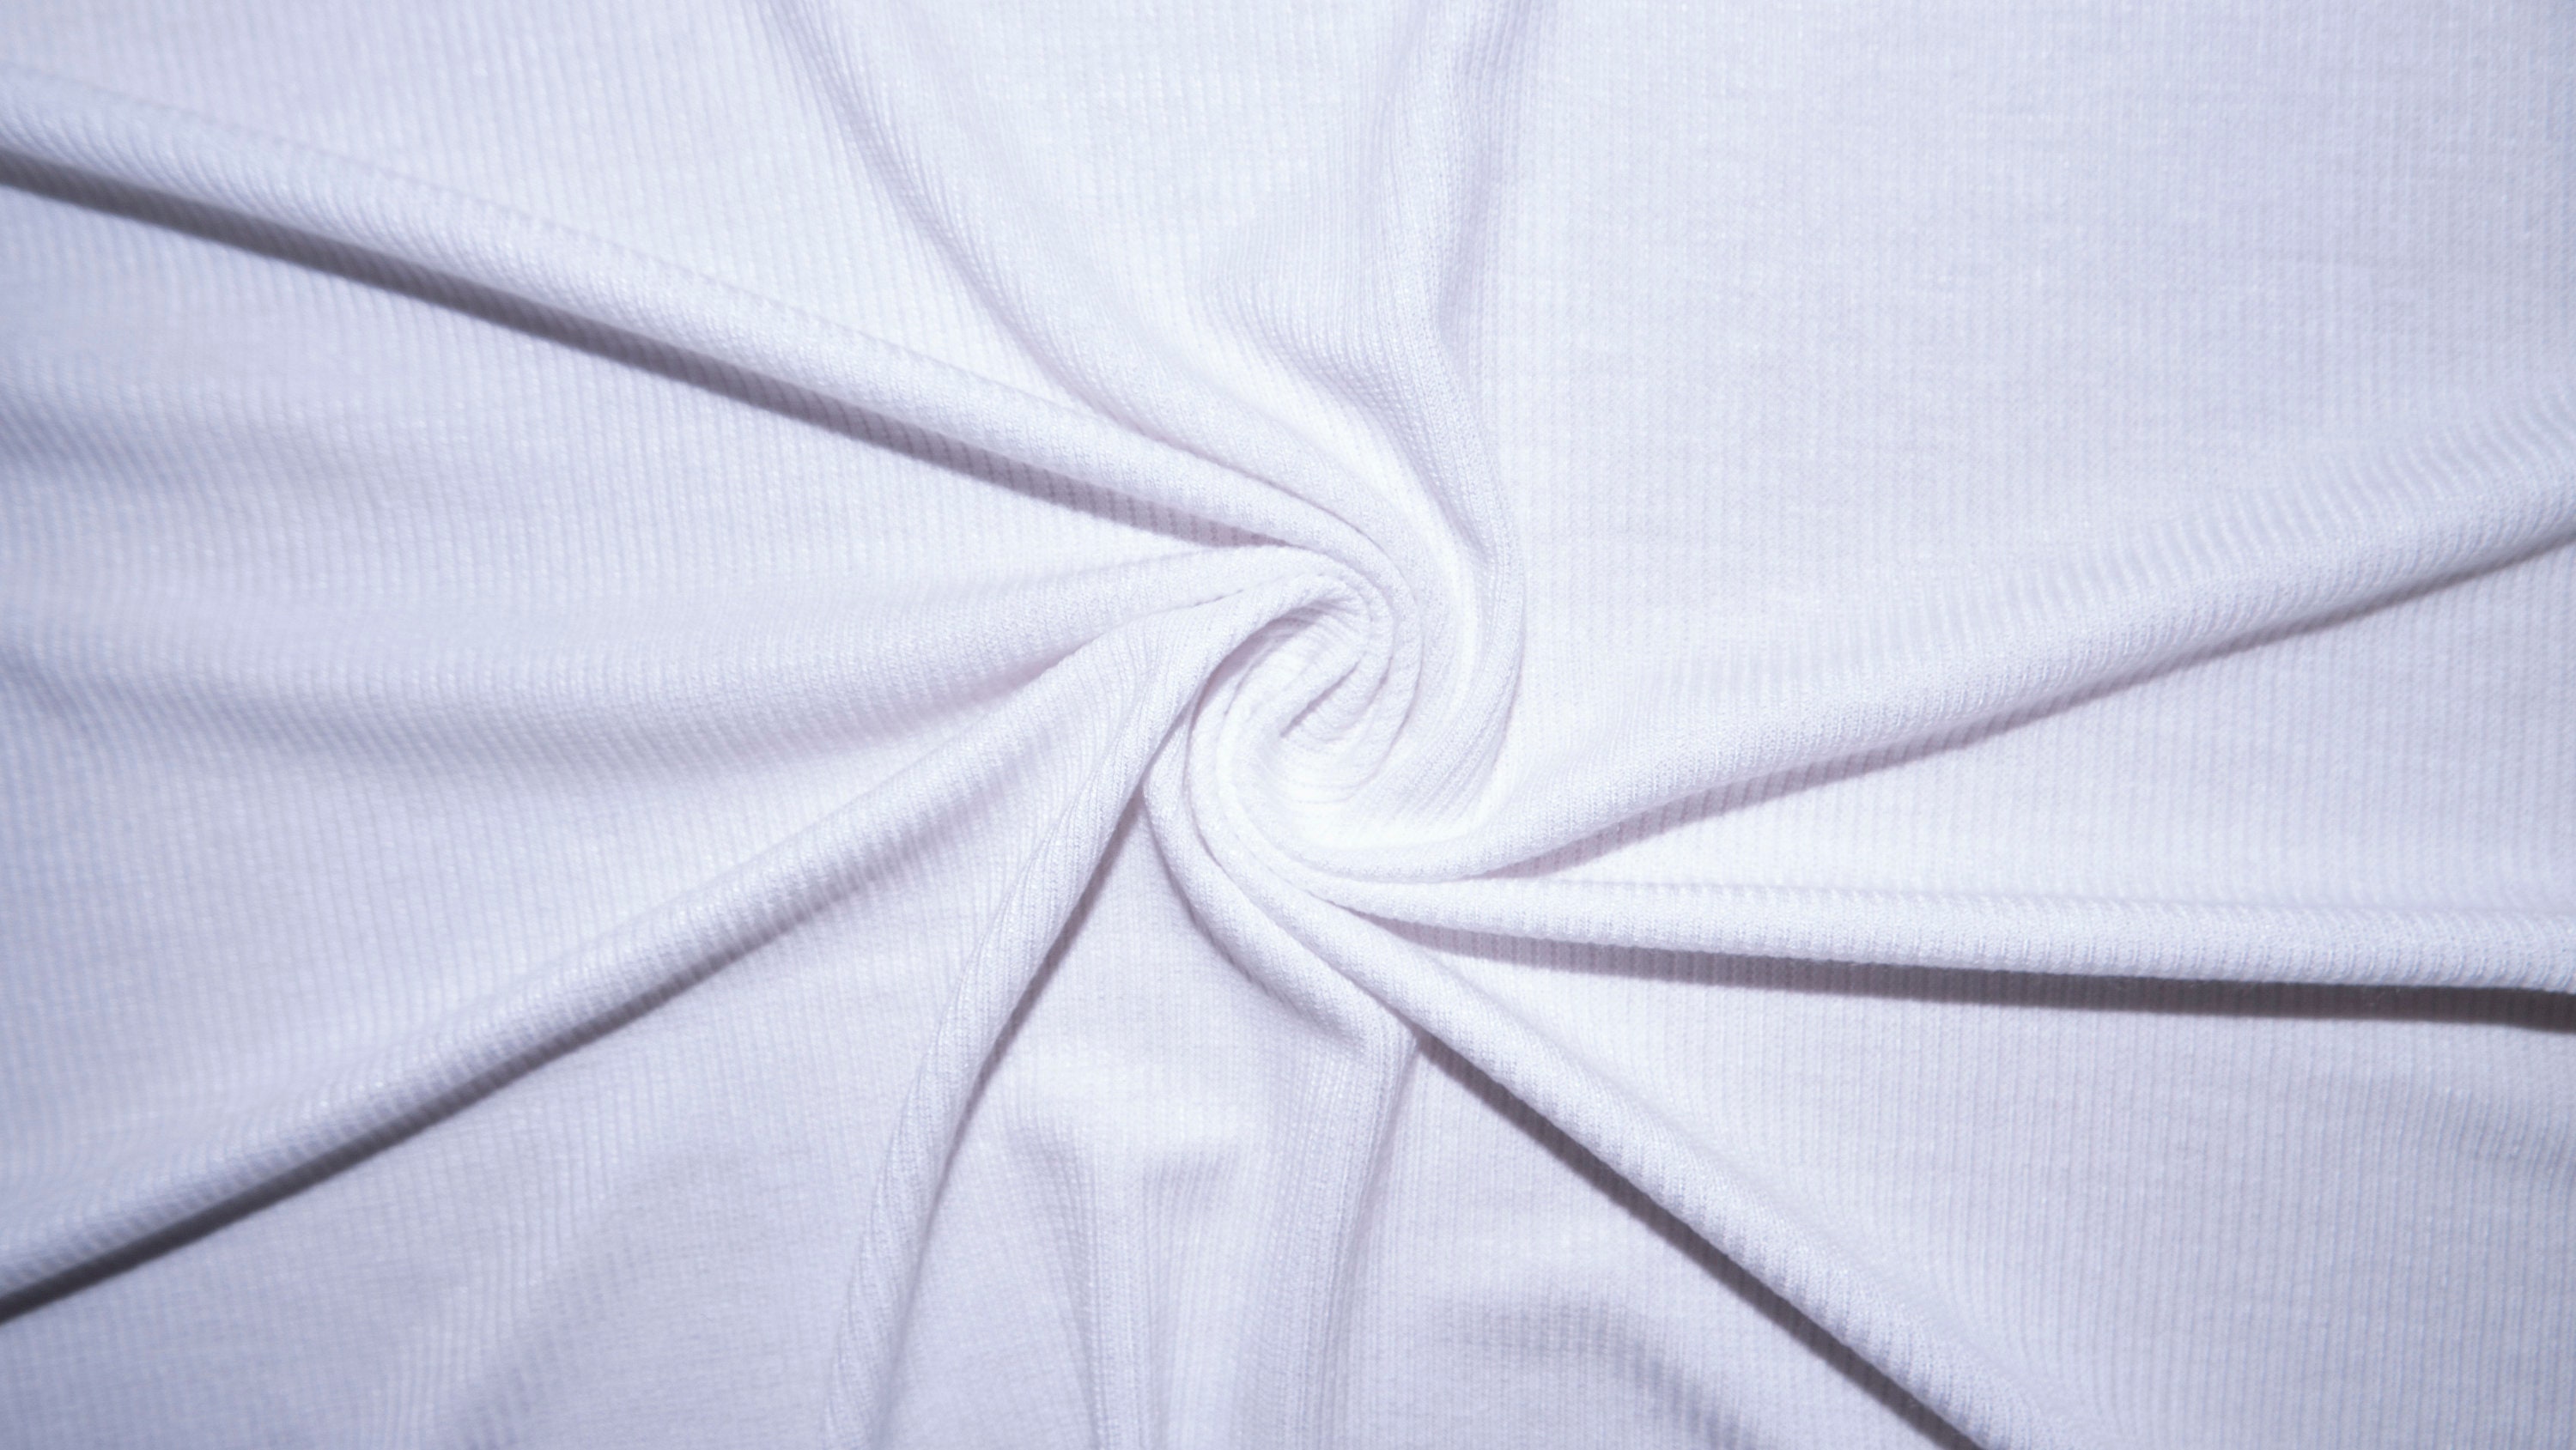 White Cotton/Spandex Jersey Fabric - 240 GSM